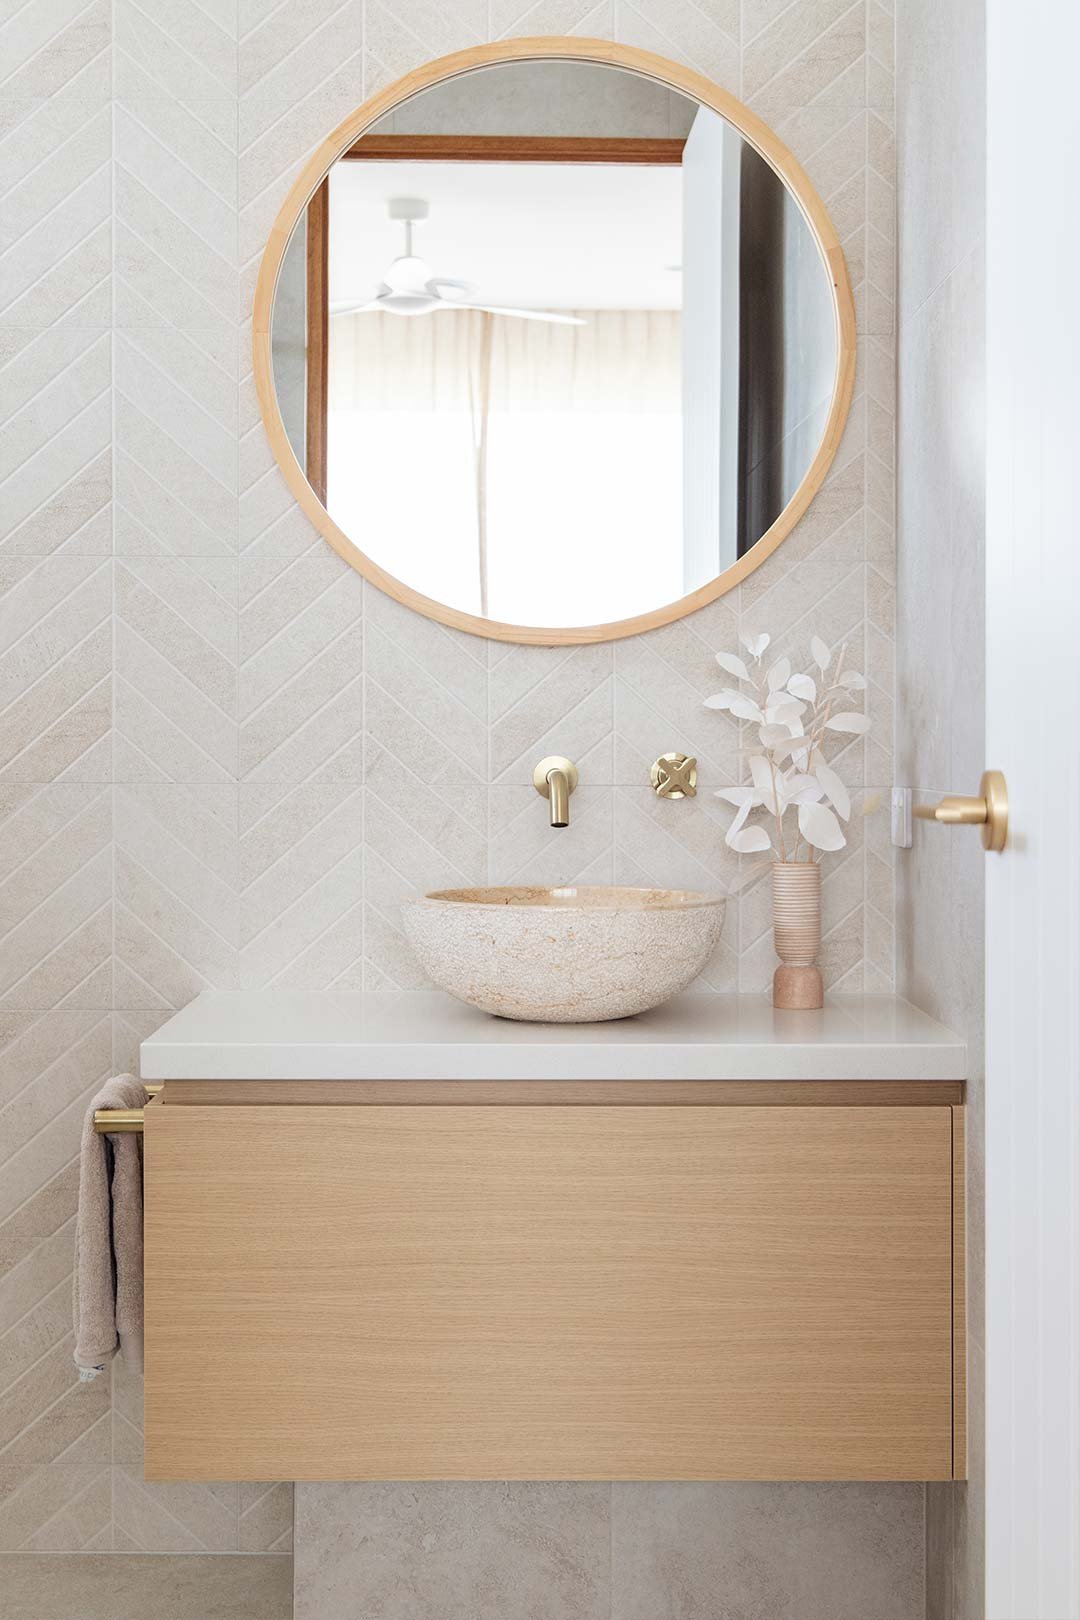 A warm neutral bathroom with a chevron tile pattern